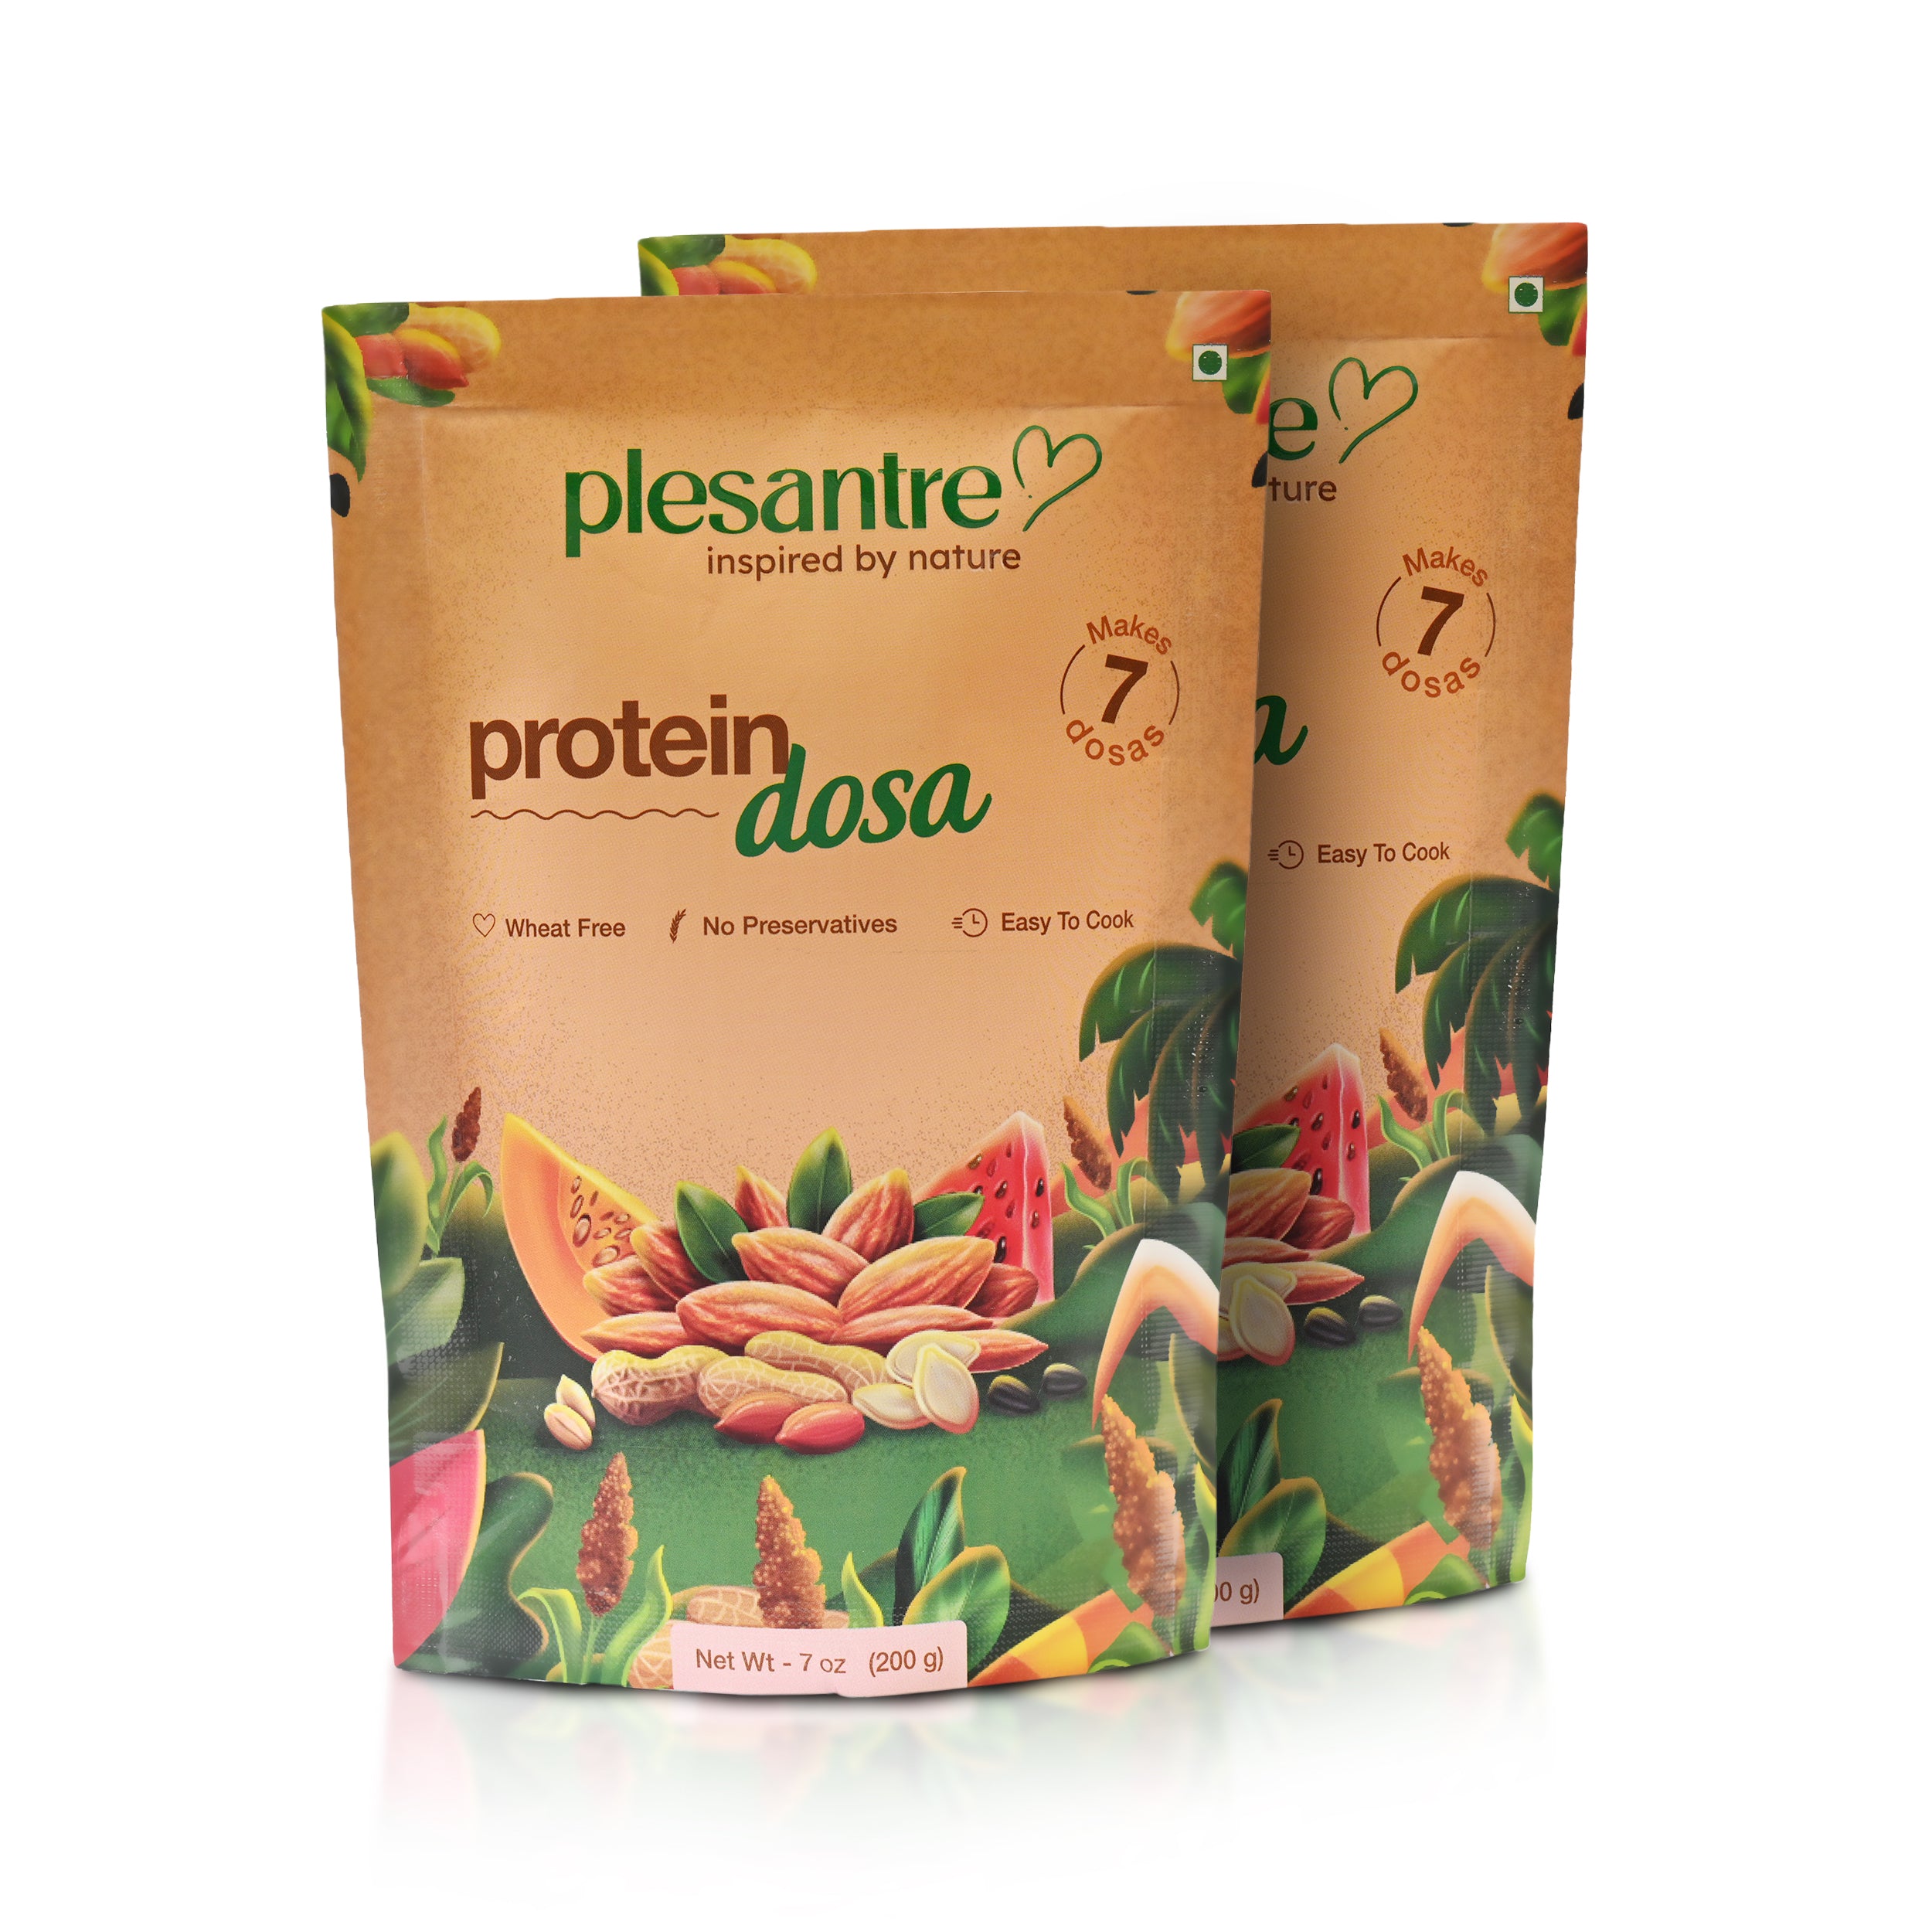 plesantre "Protein Dosa" Instant Delicious Dosa Batter Mix - Healthy Nutritious Breakfast Premix - Plant Proteins, High Fibre, Low GI, Low Carb & Diabetic Friendly - 200g x Pack of 2, Makes 15 Dosas